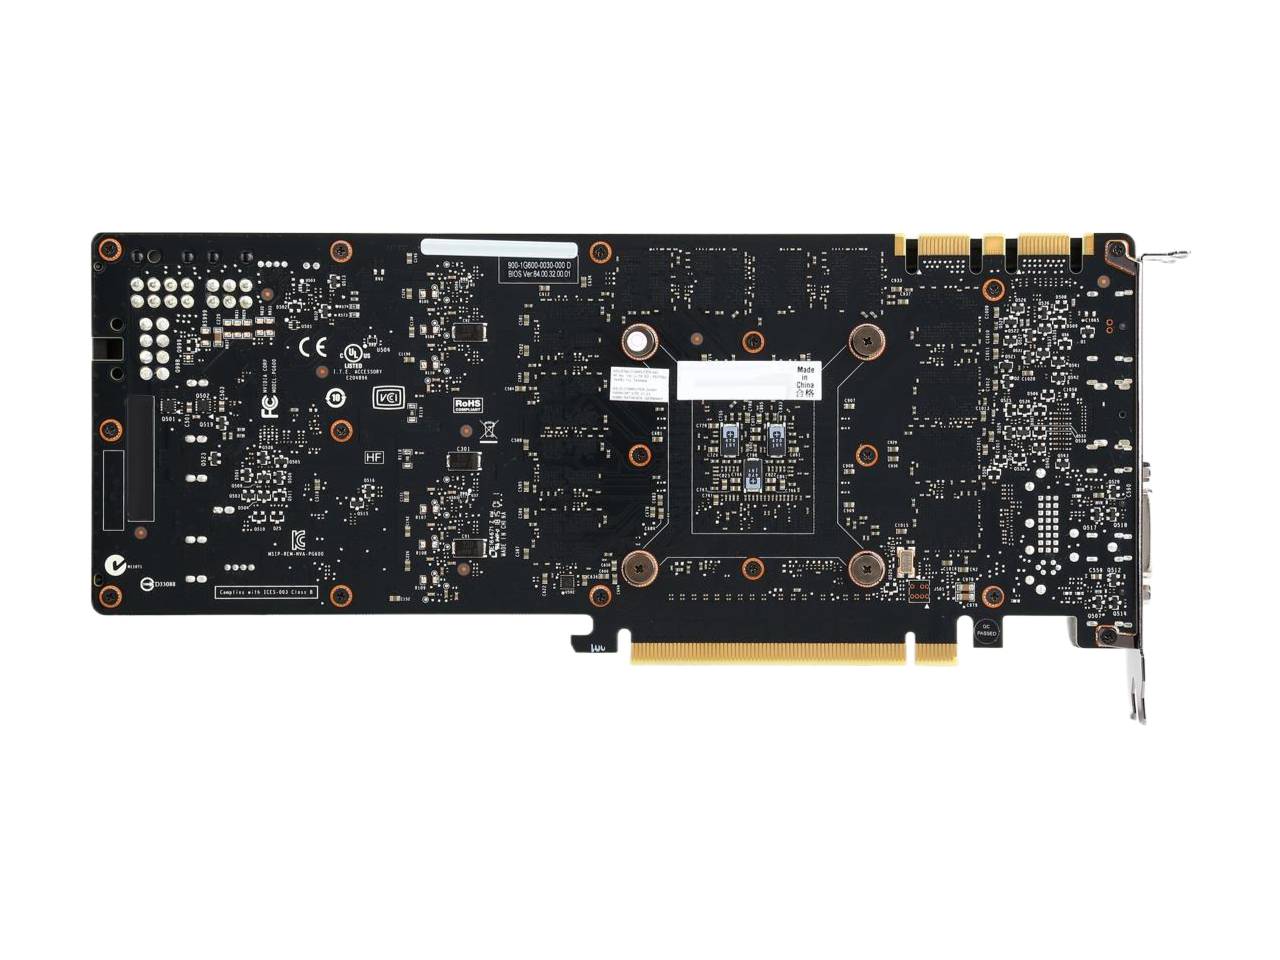 EVGA GeForce GTX 980 Ti 6GB GAMING Whisper Silent Cooling Graphics Card 06G-P4-4990-KR